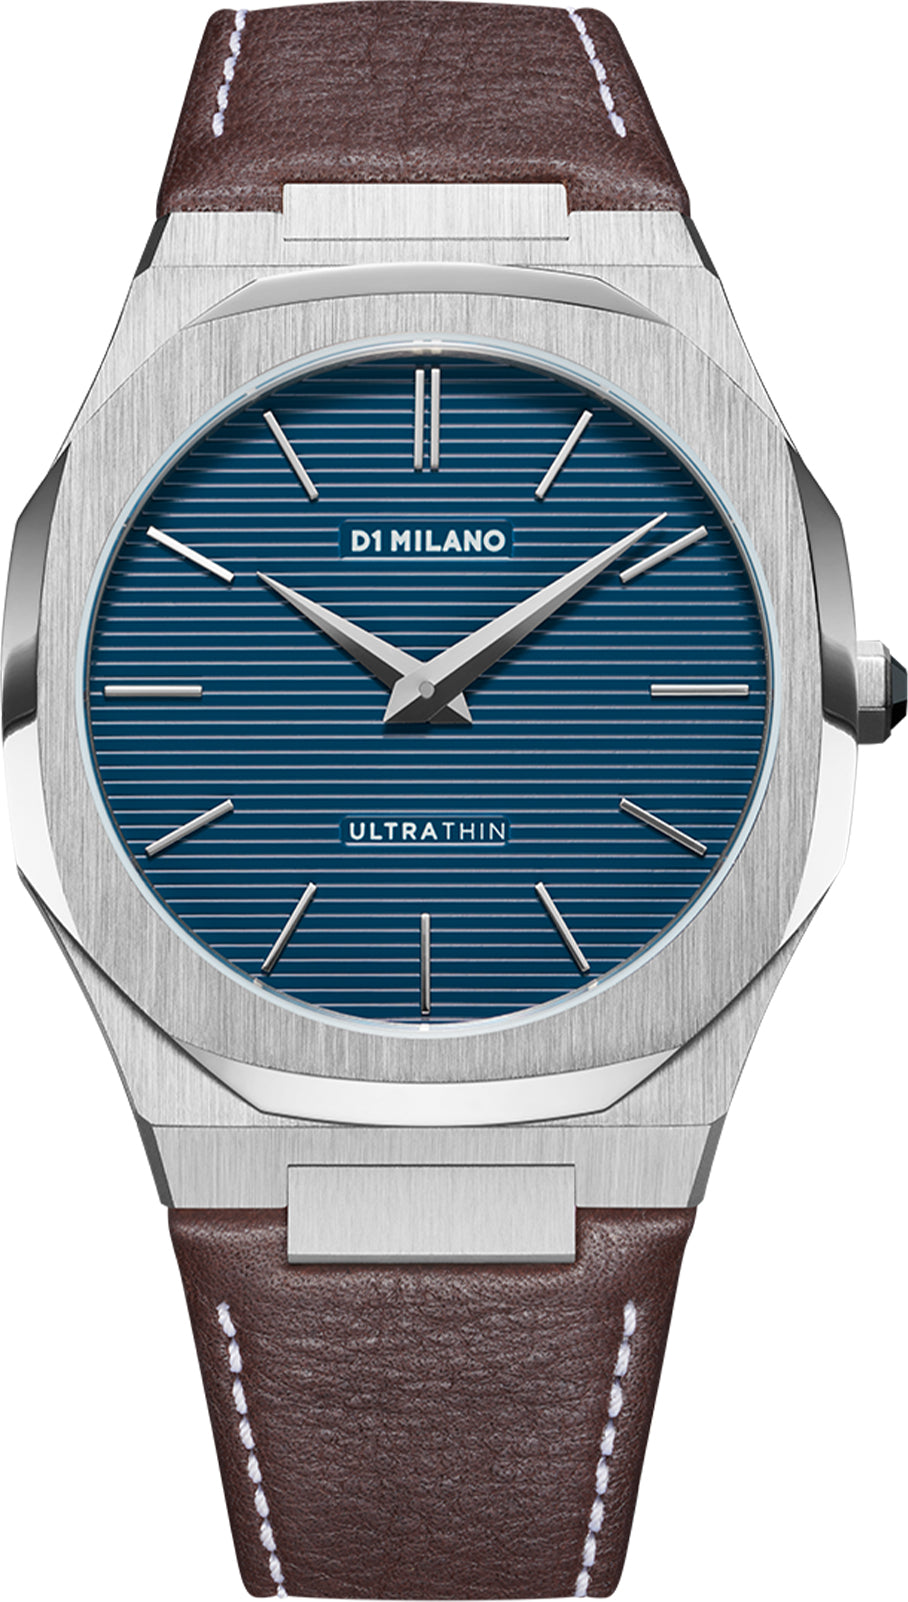 Photos - Wrist Watch Milano D1  Watch Ultra Thin - Blue DLM-032 